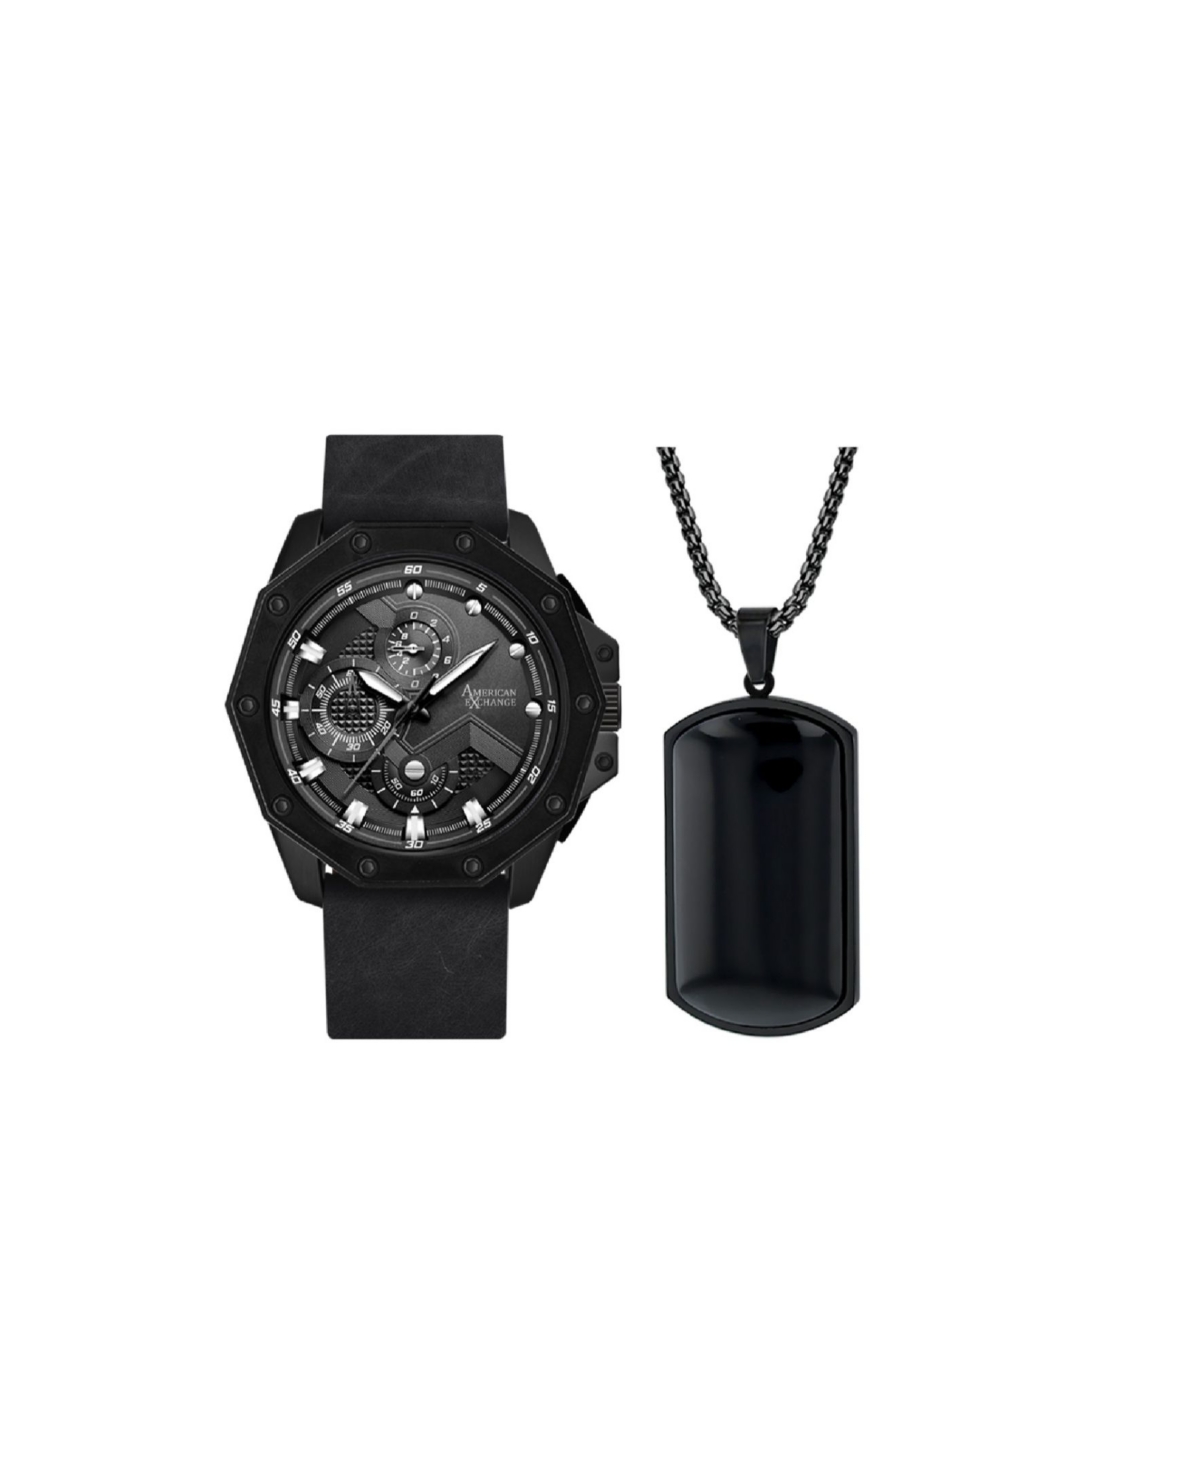 American Exchange Men's Analog Matte Black Leather Watch 48mm Gift Set, 2 Pieces